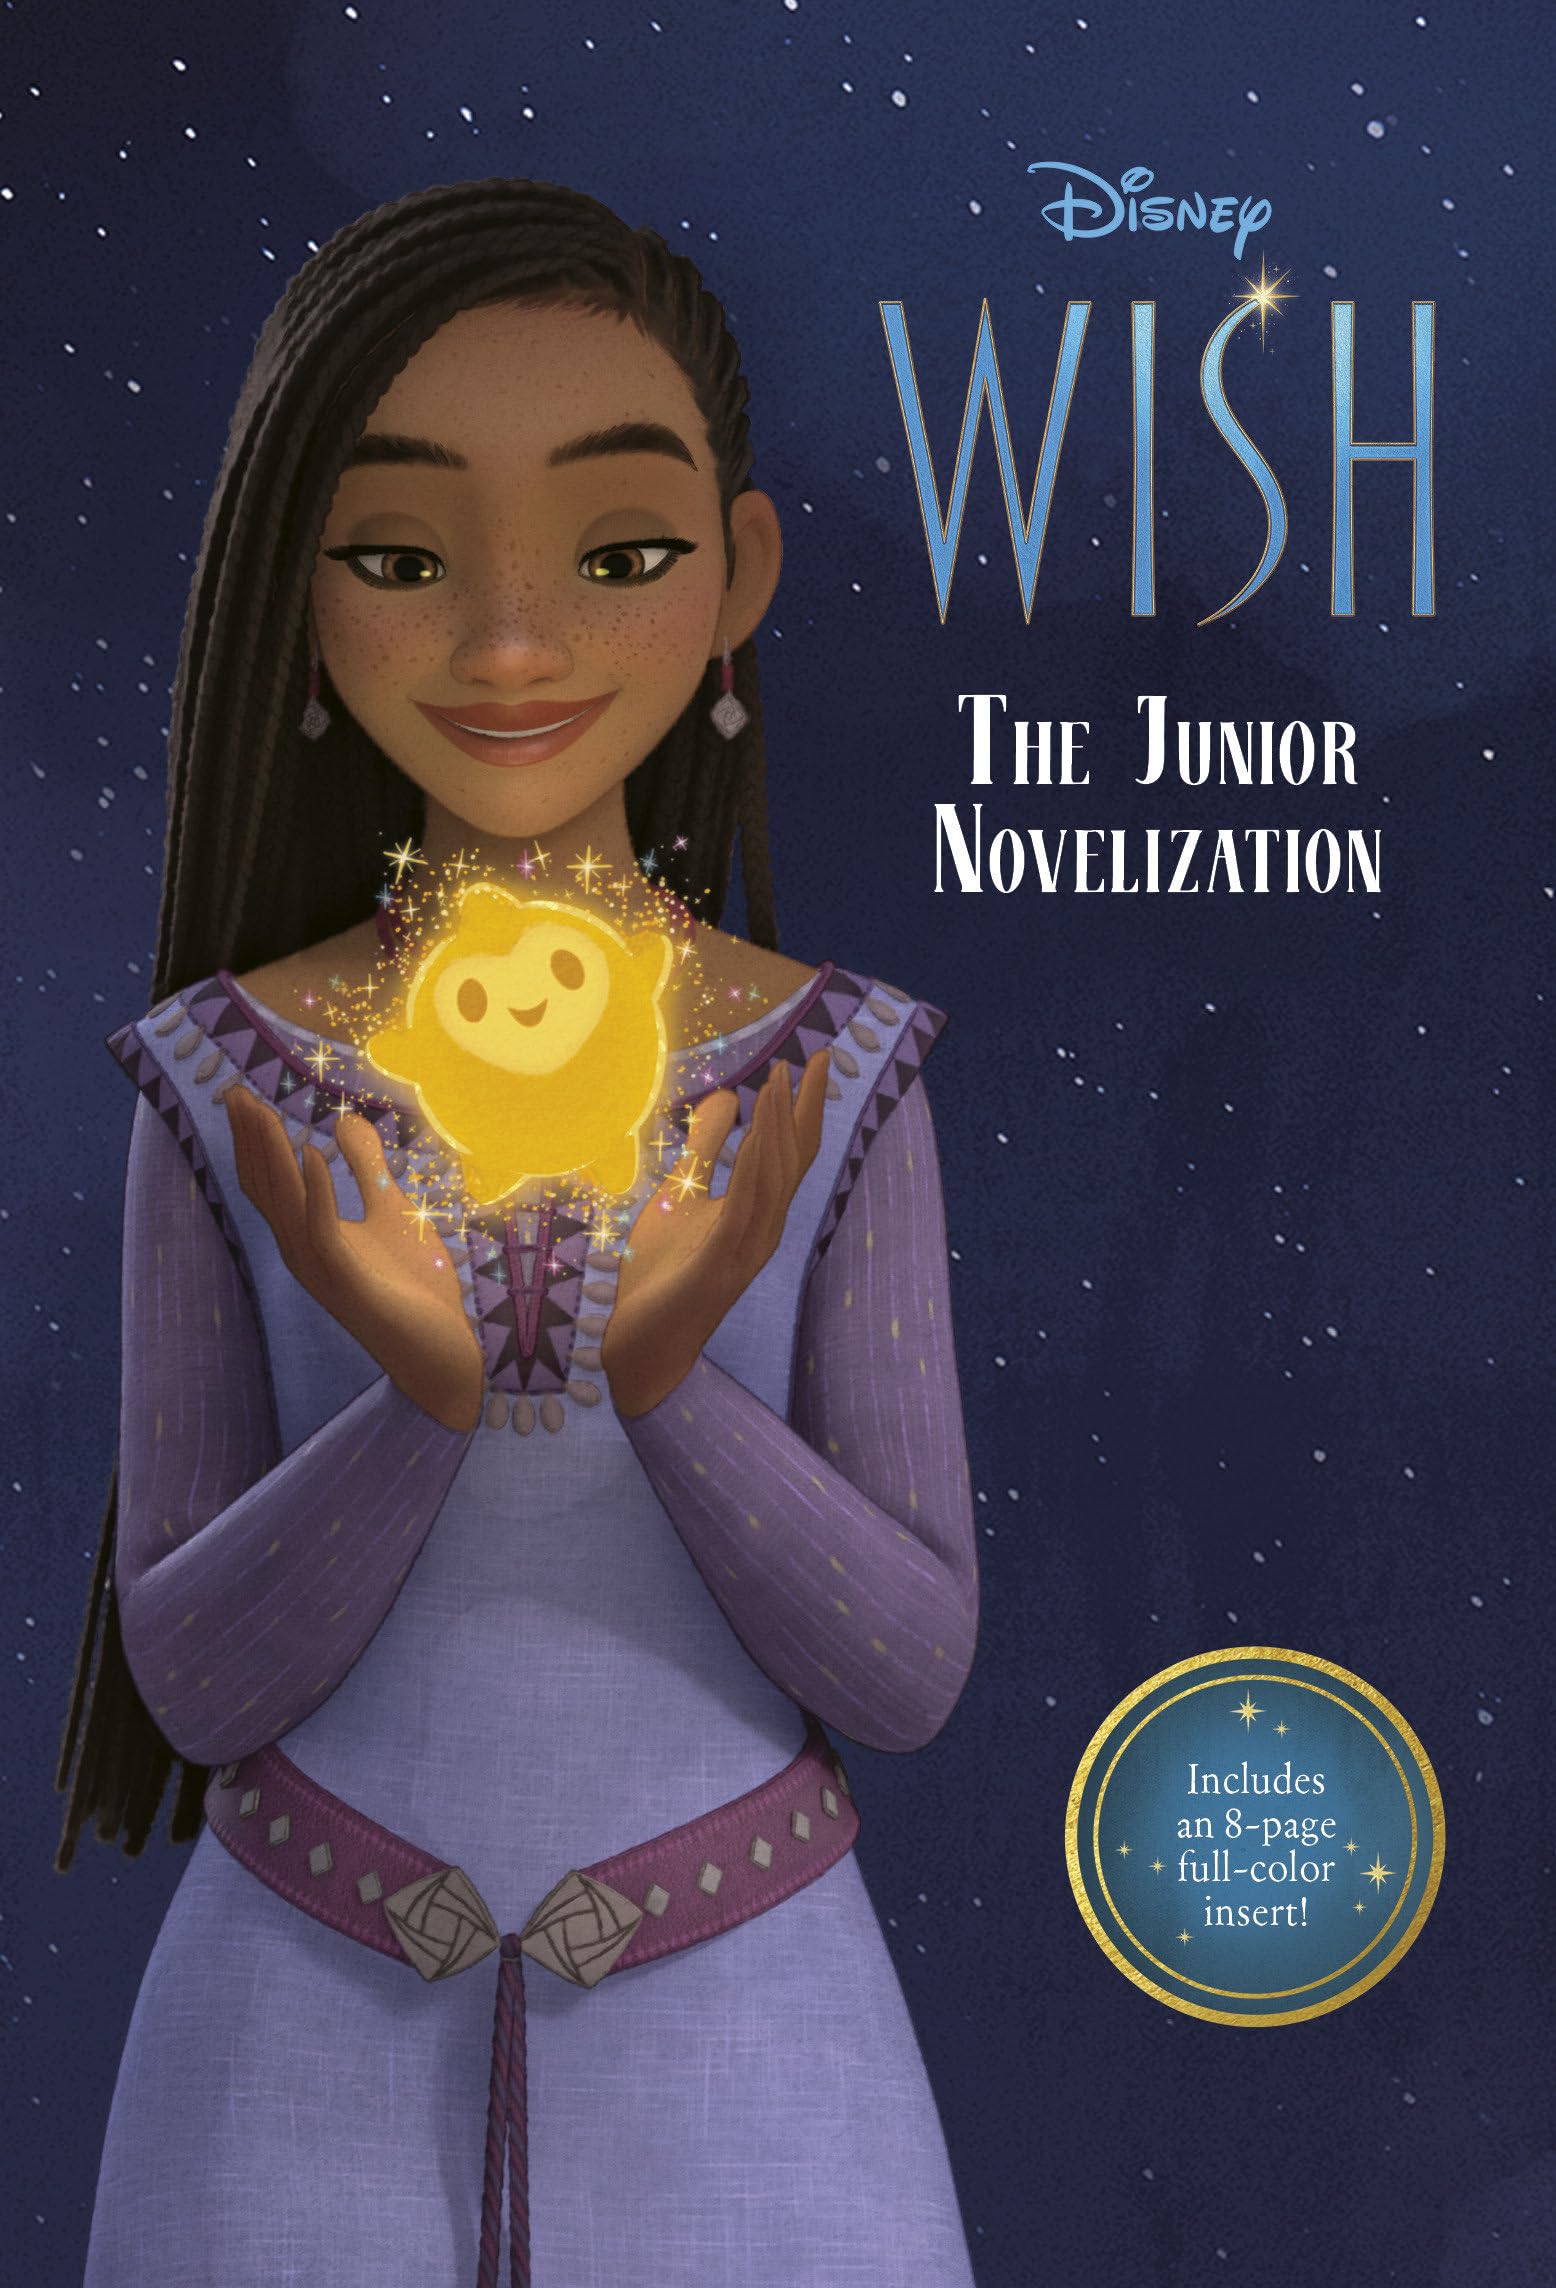 Disney Wish movie books - YouLoveIt.com